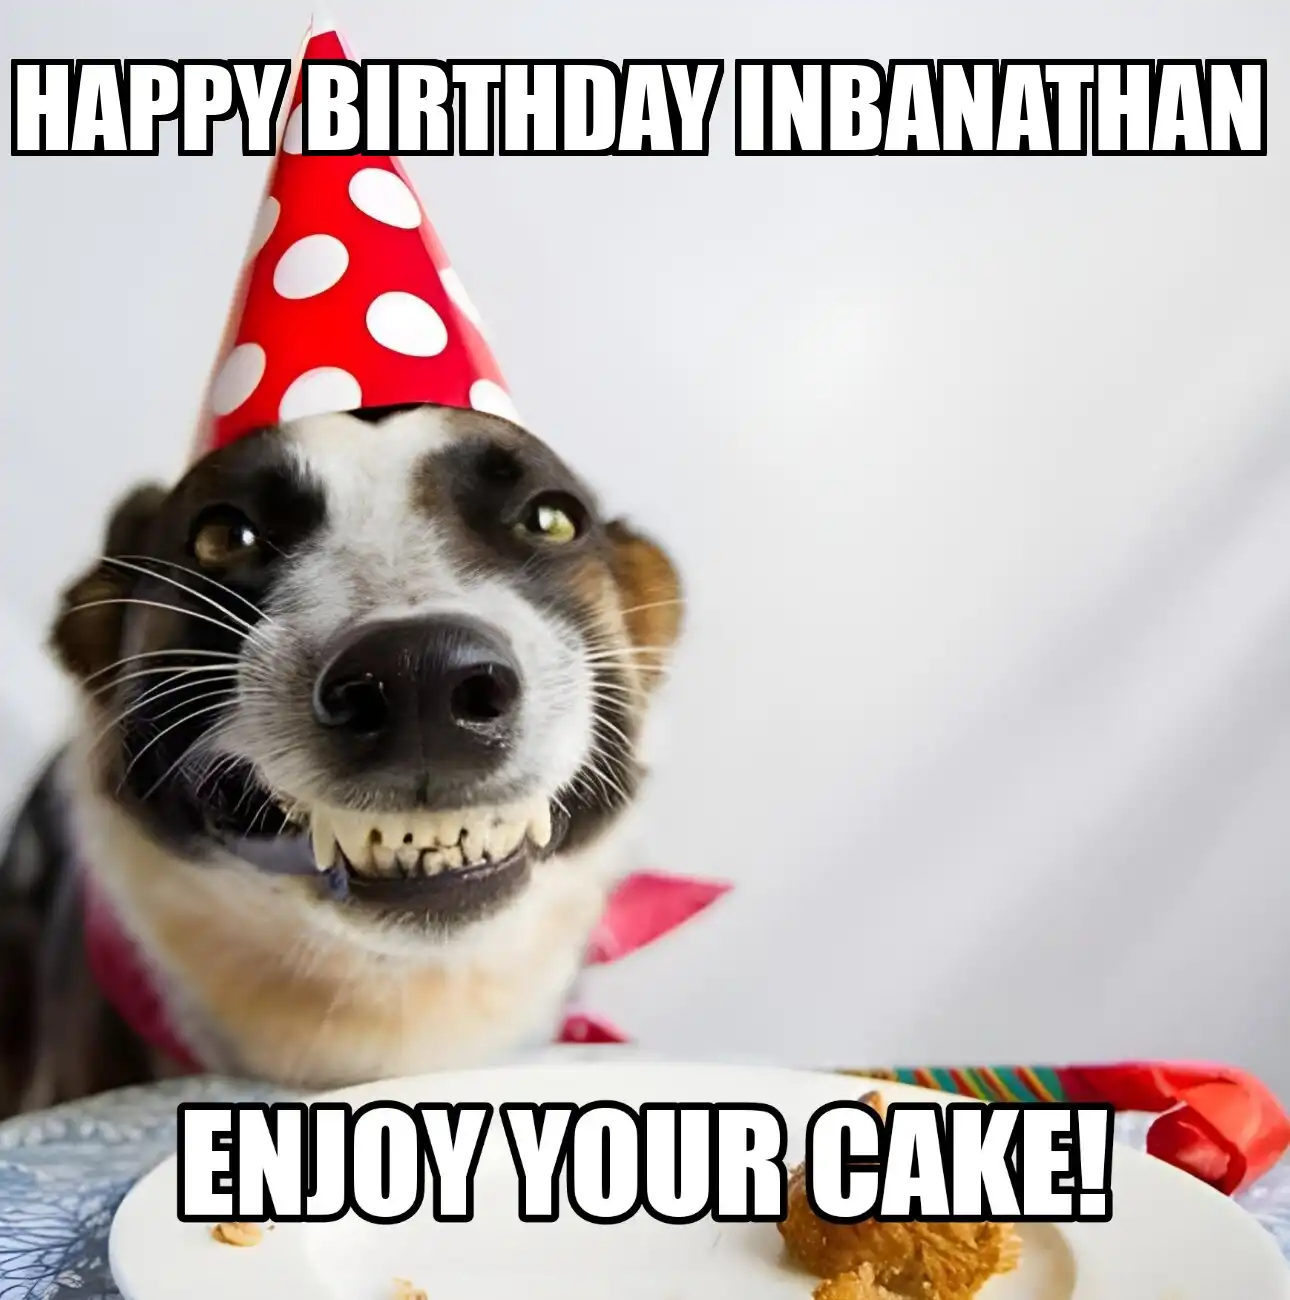 Happy Birthday Inbanathan Enjoy Your Cake Dog Meme